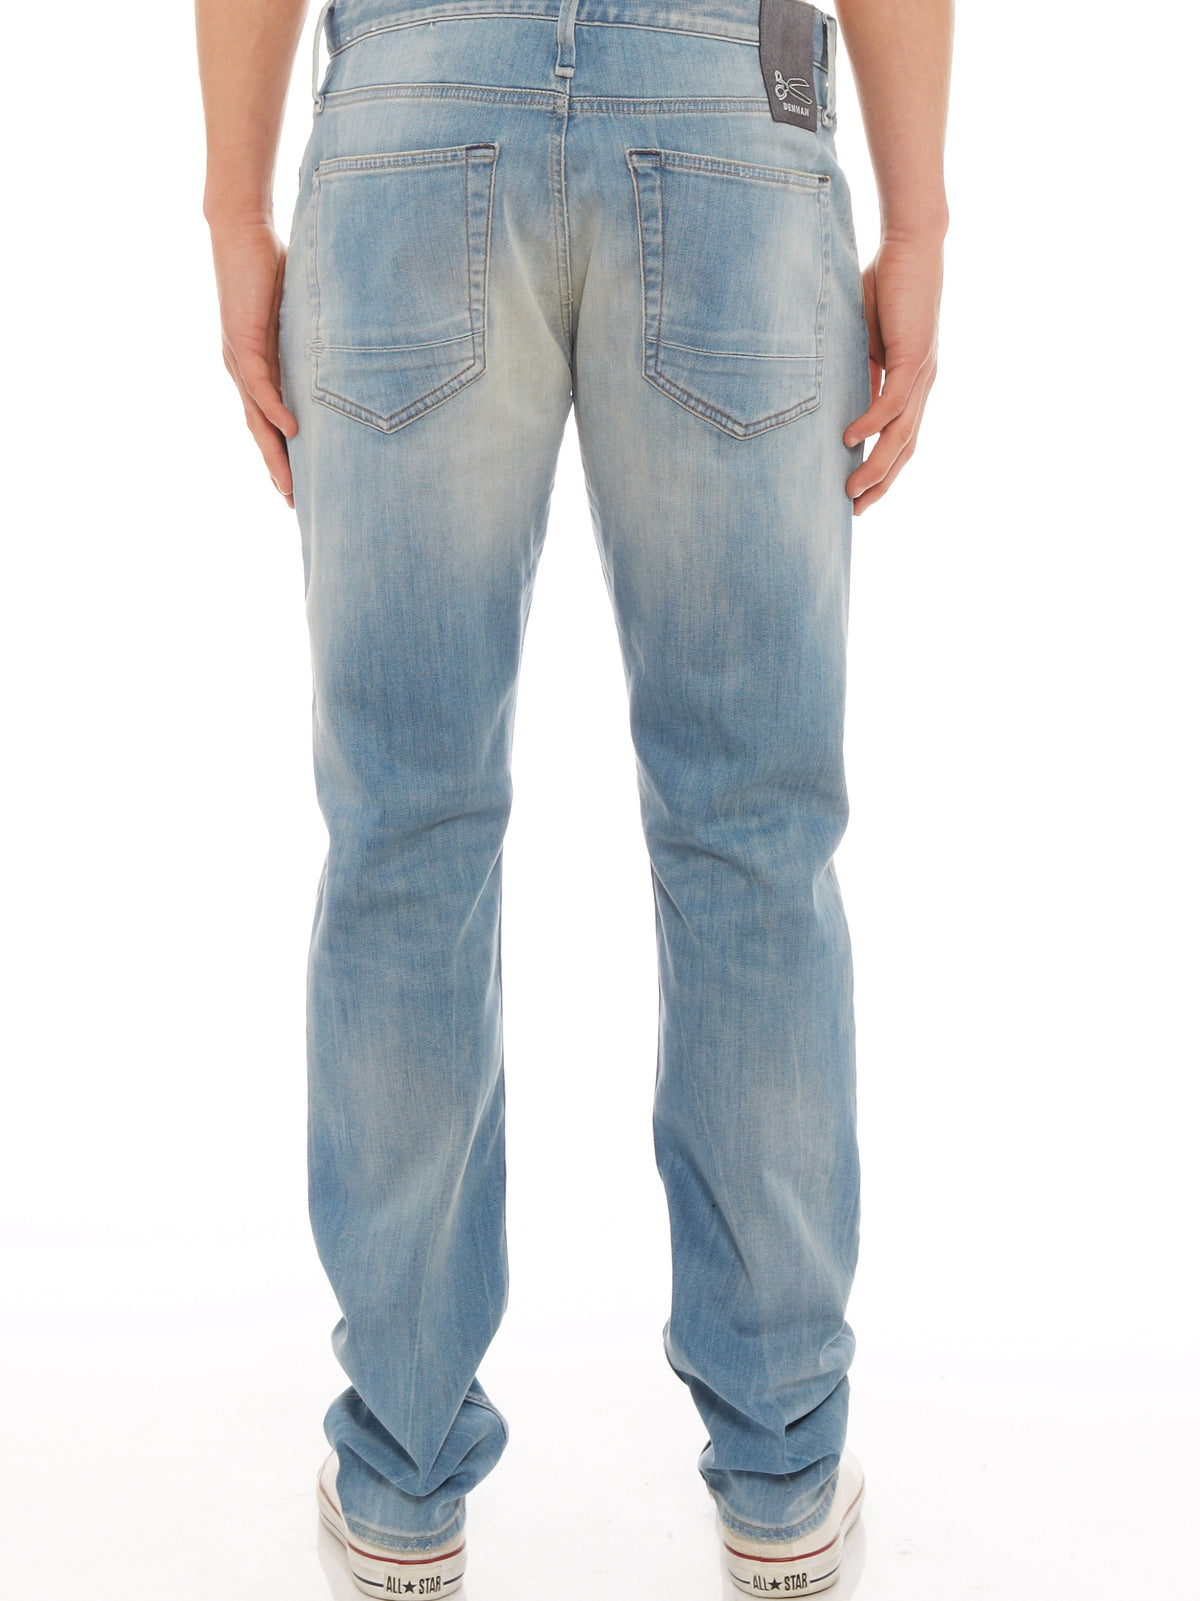 Razor Jeans in HSS Faded Blue Denim